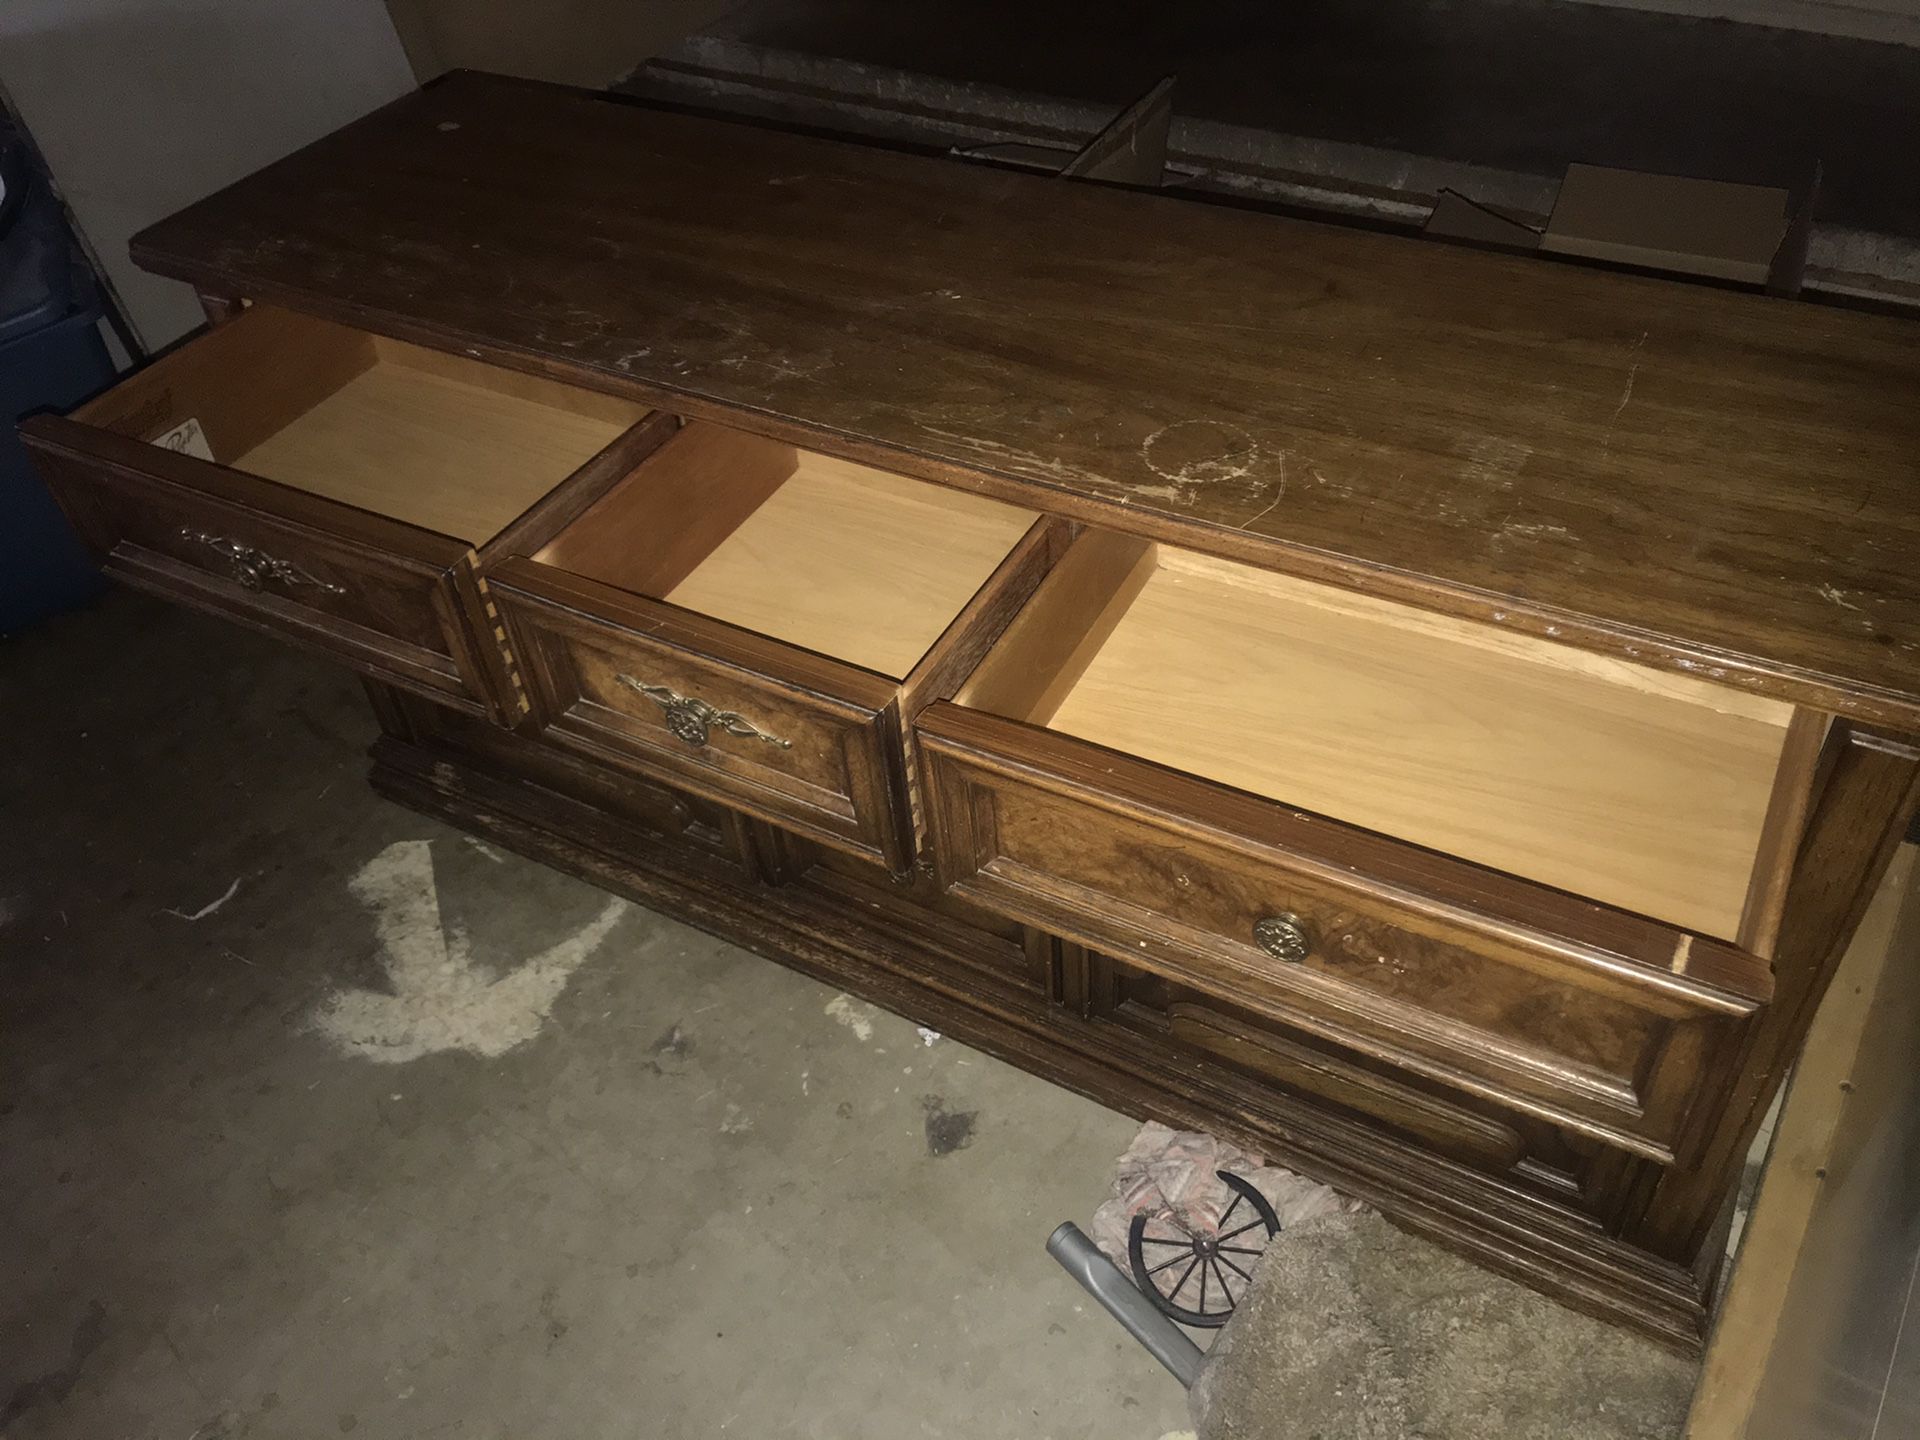 Nice antique-ish dresser